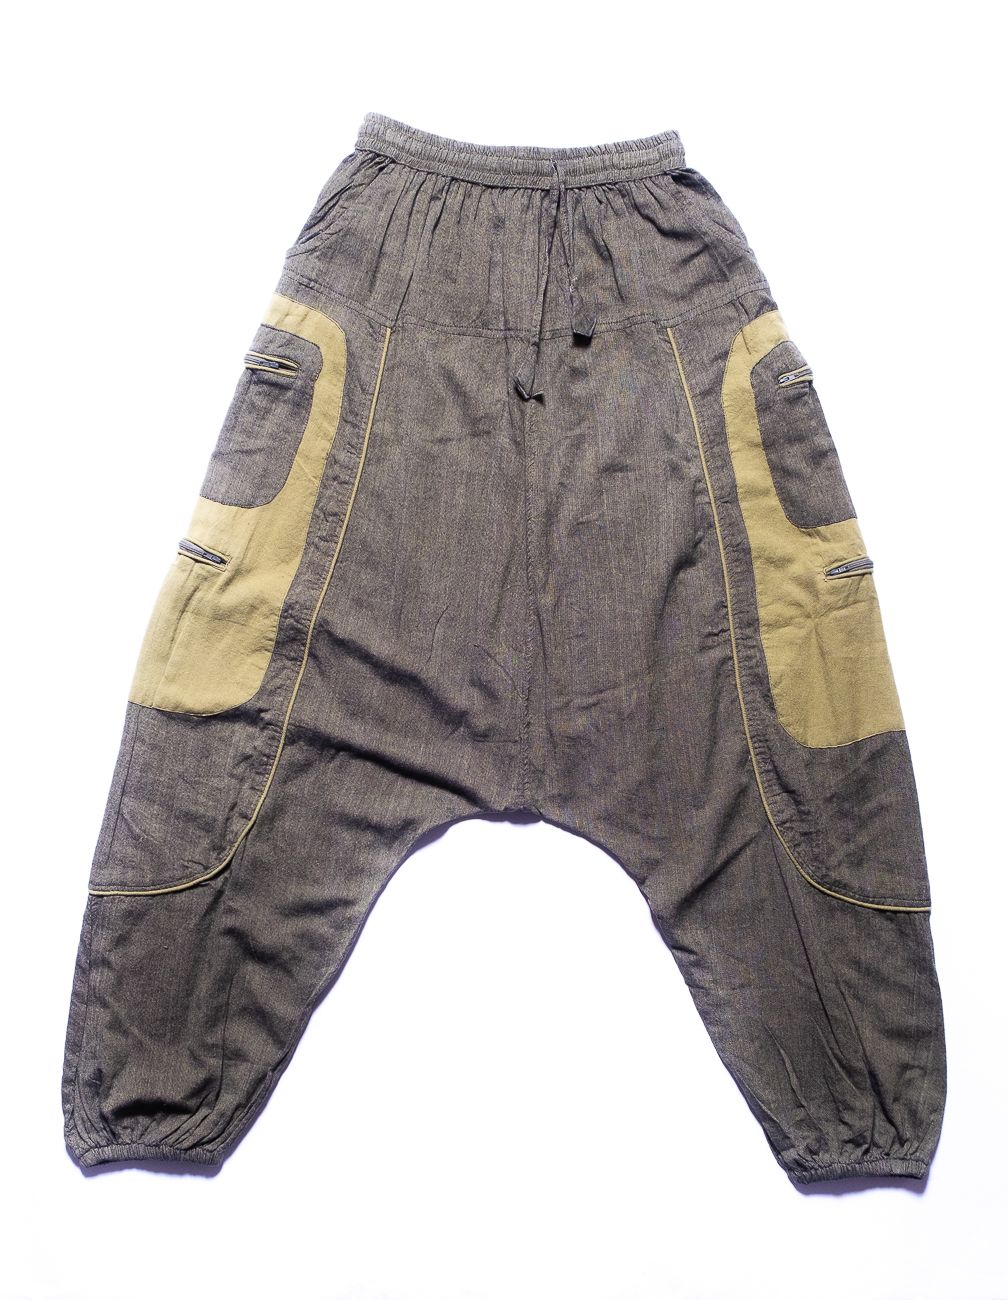 UNISEX turecké kalhoty RAMA z Nepálu z lehčího materiálu - NT0053-28B-018 KENAVI